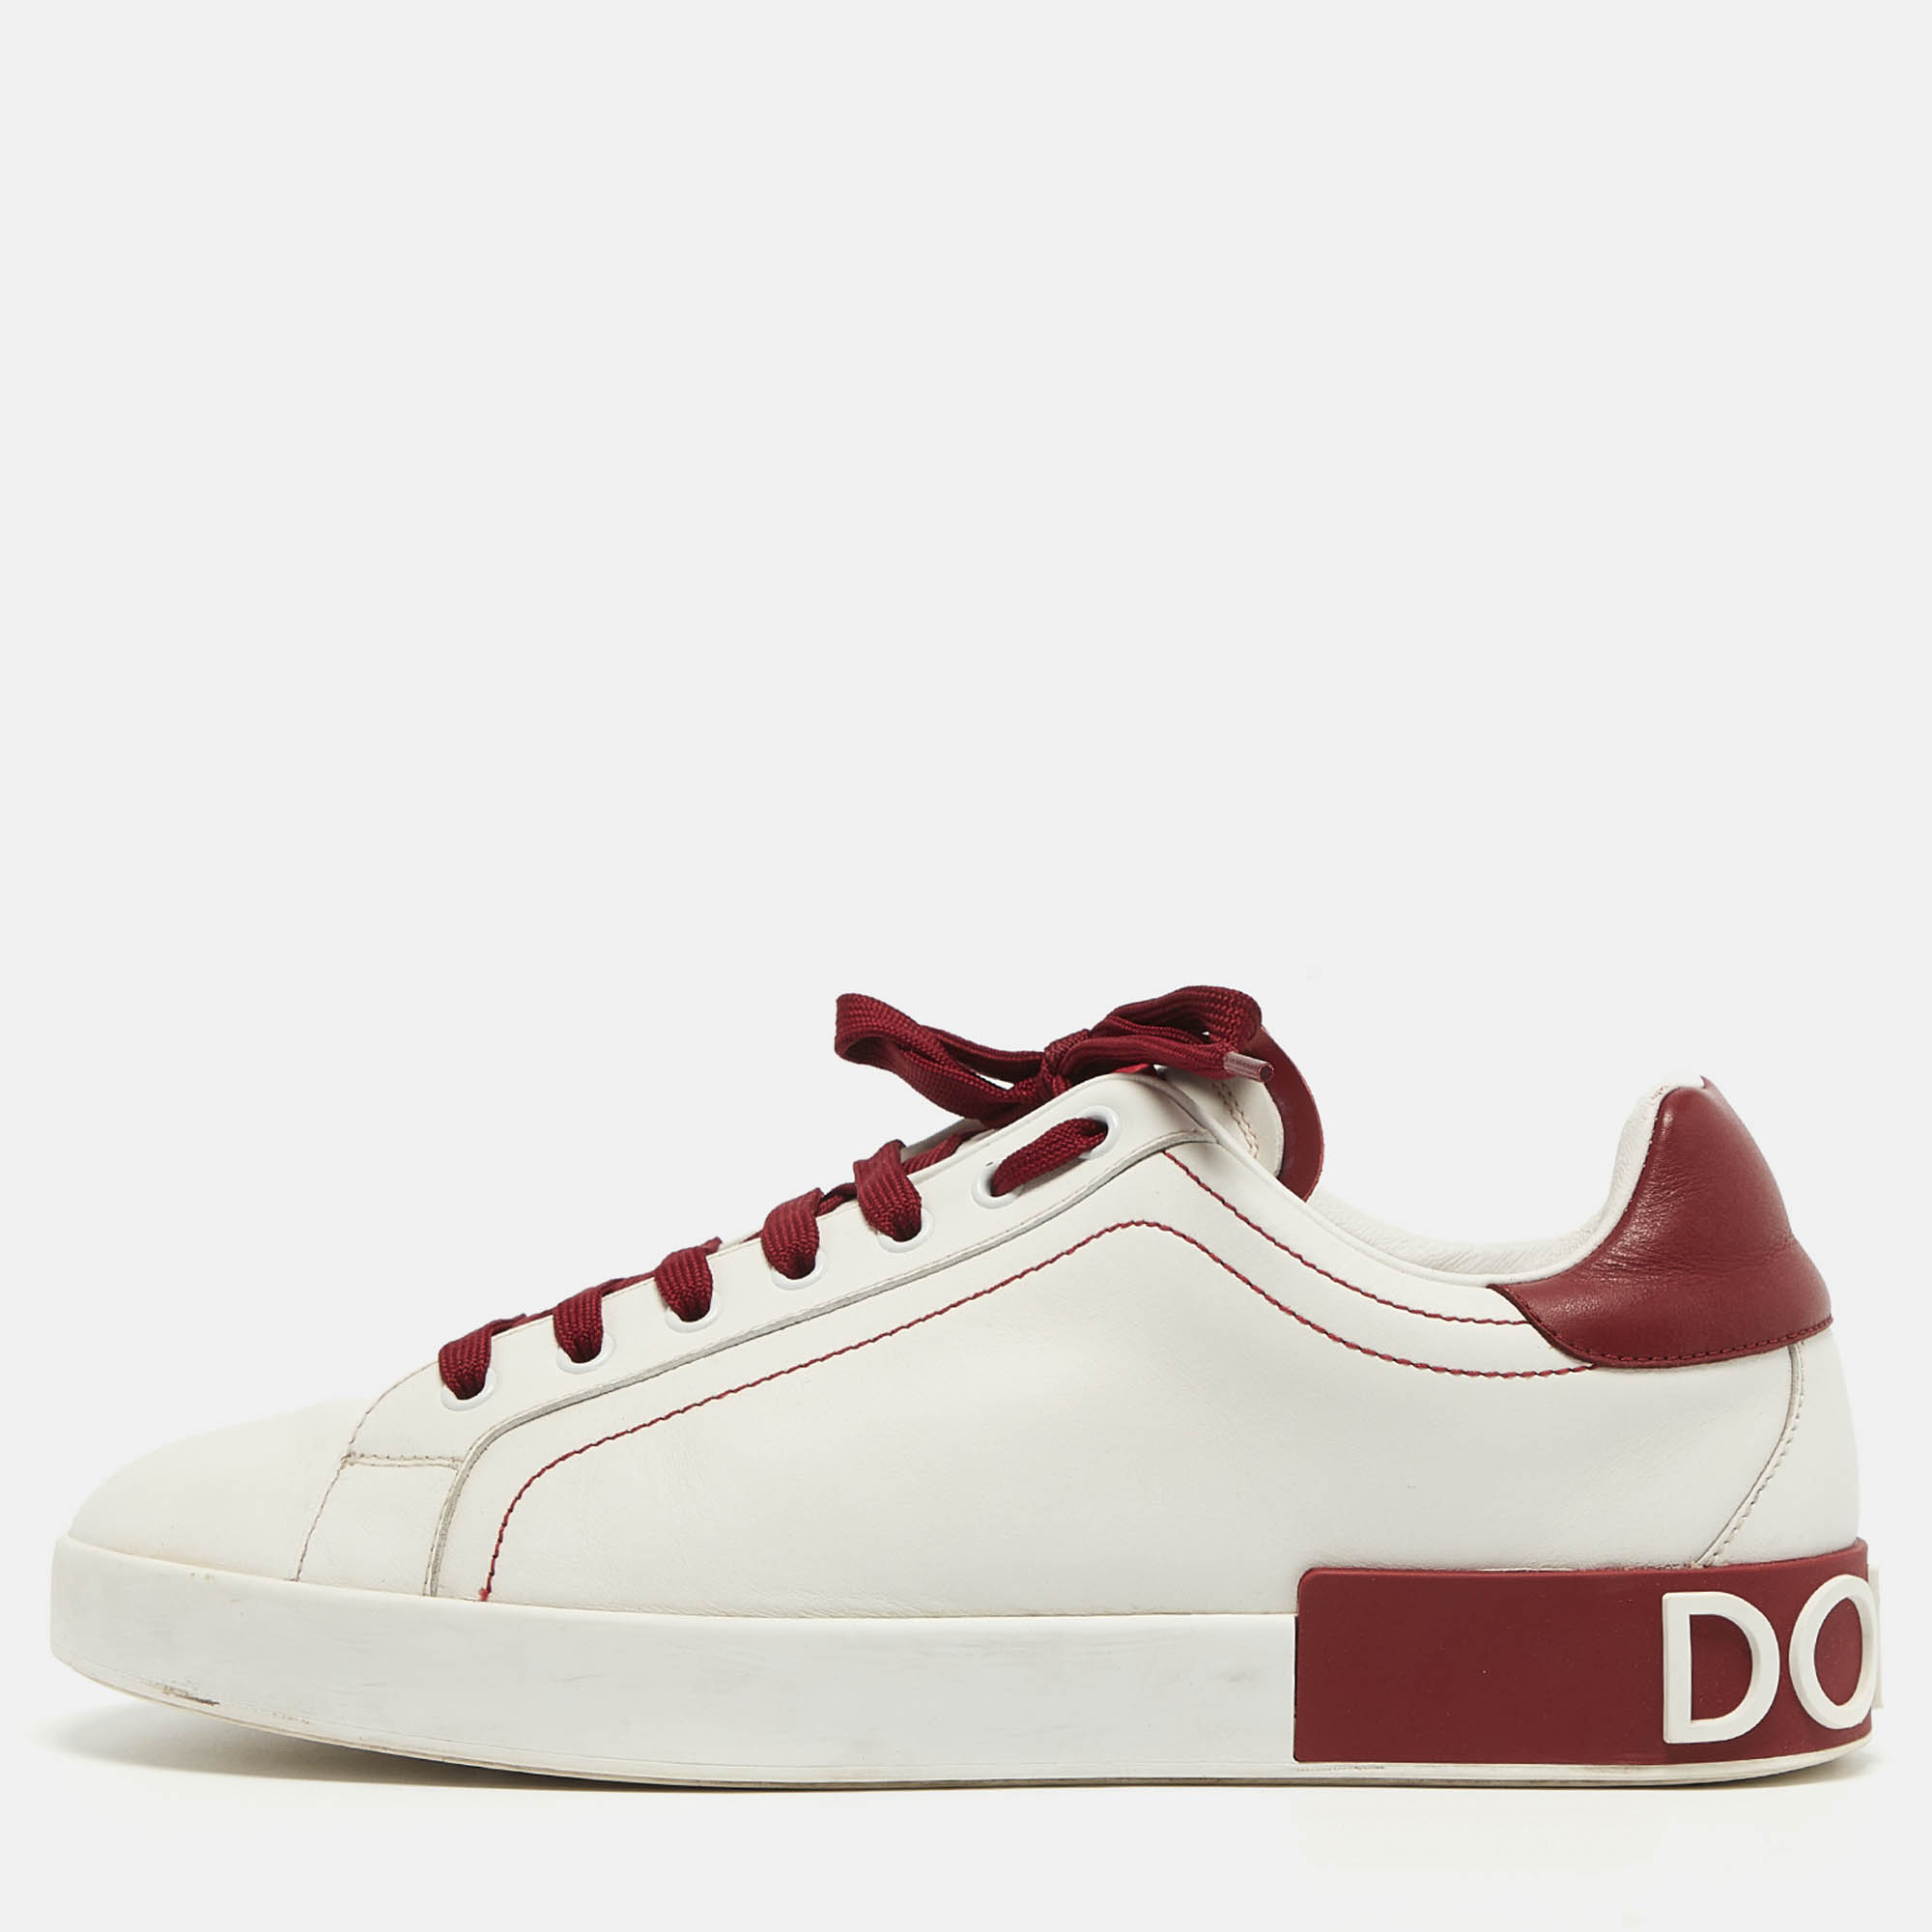 Dolce & gabbana white/burgundy leather portifino sneakers size 44